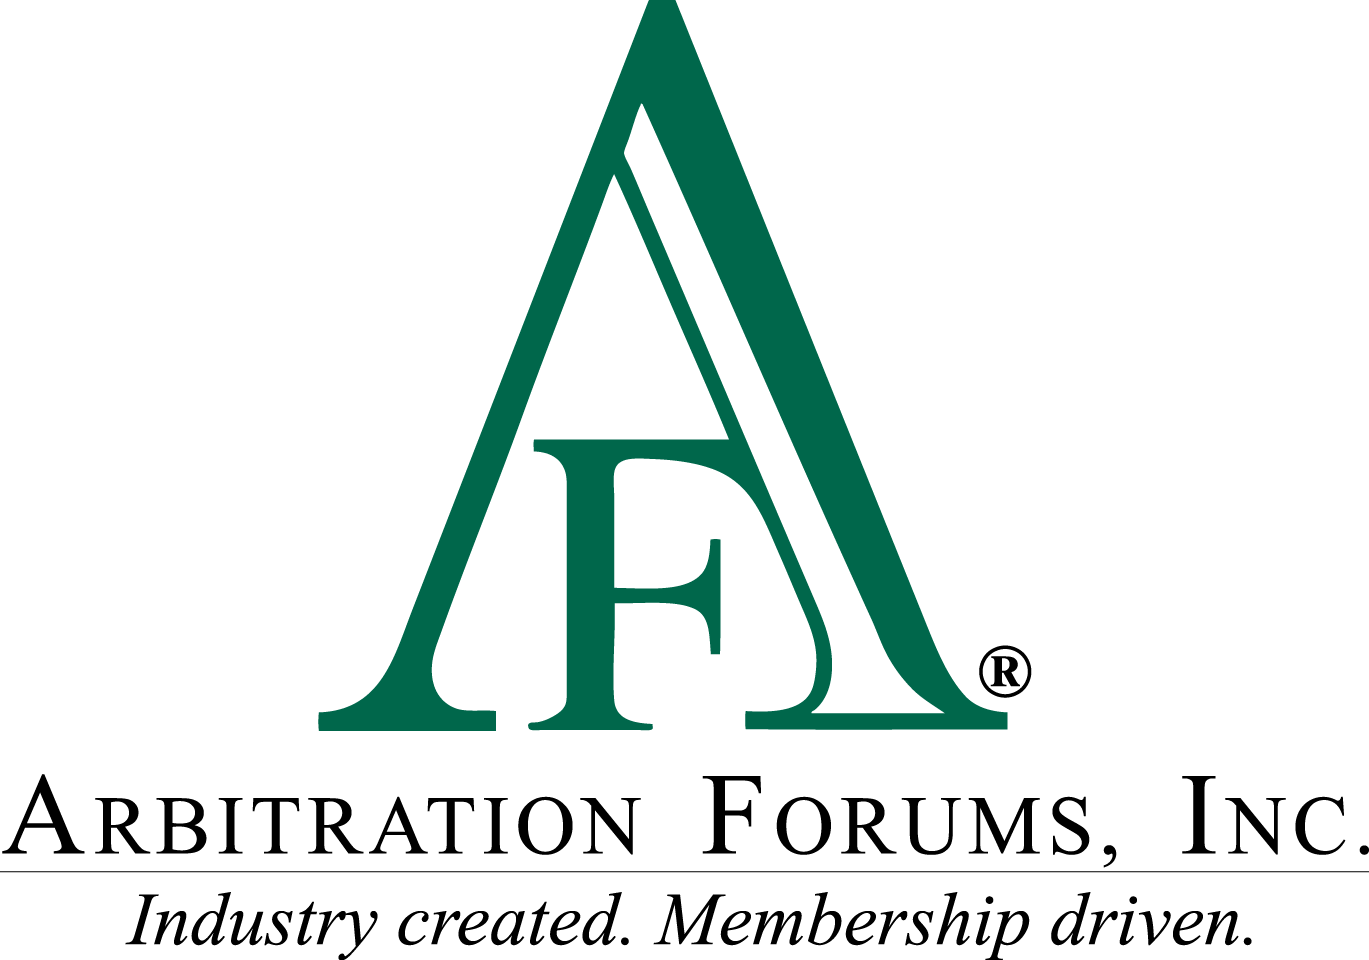 Arbitration Forums, Inc. logo